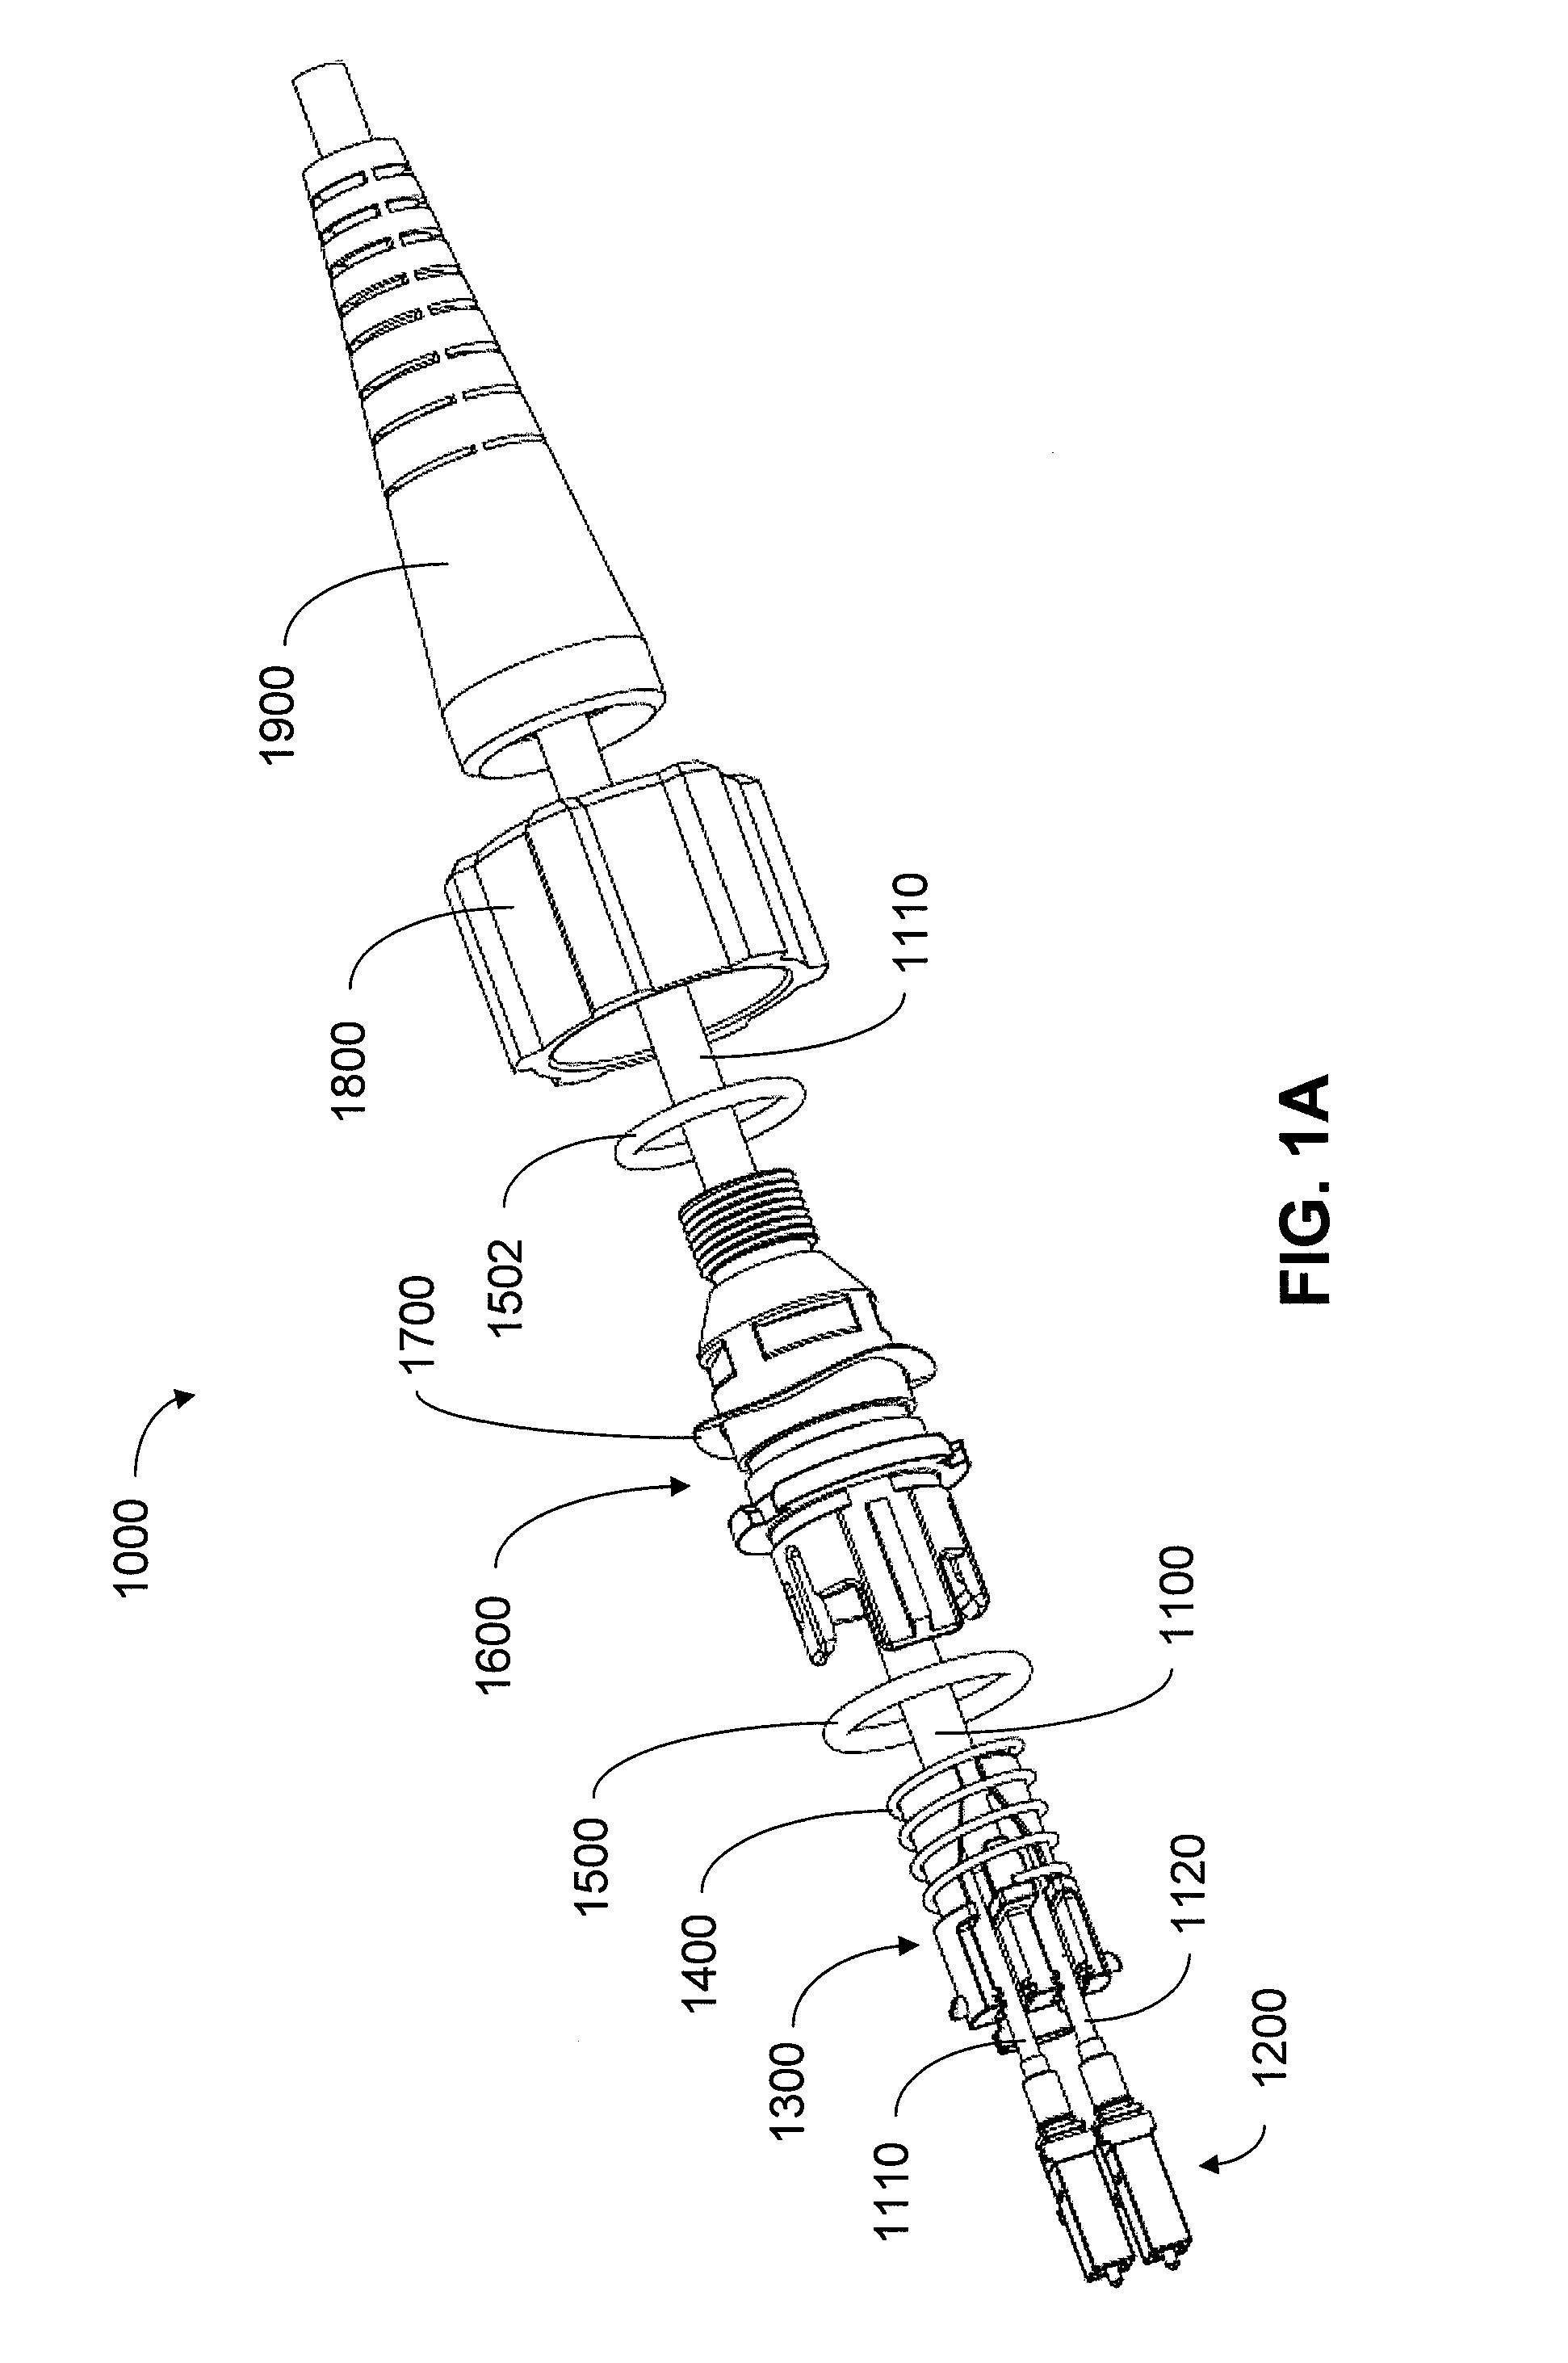 Outdoor transceiver connector